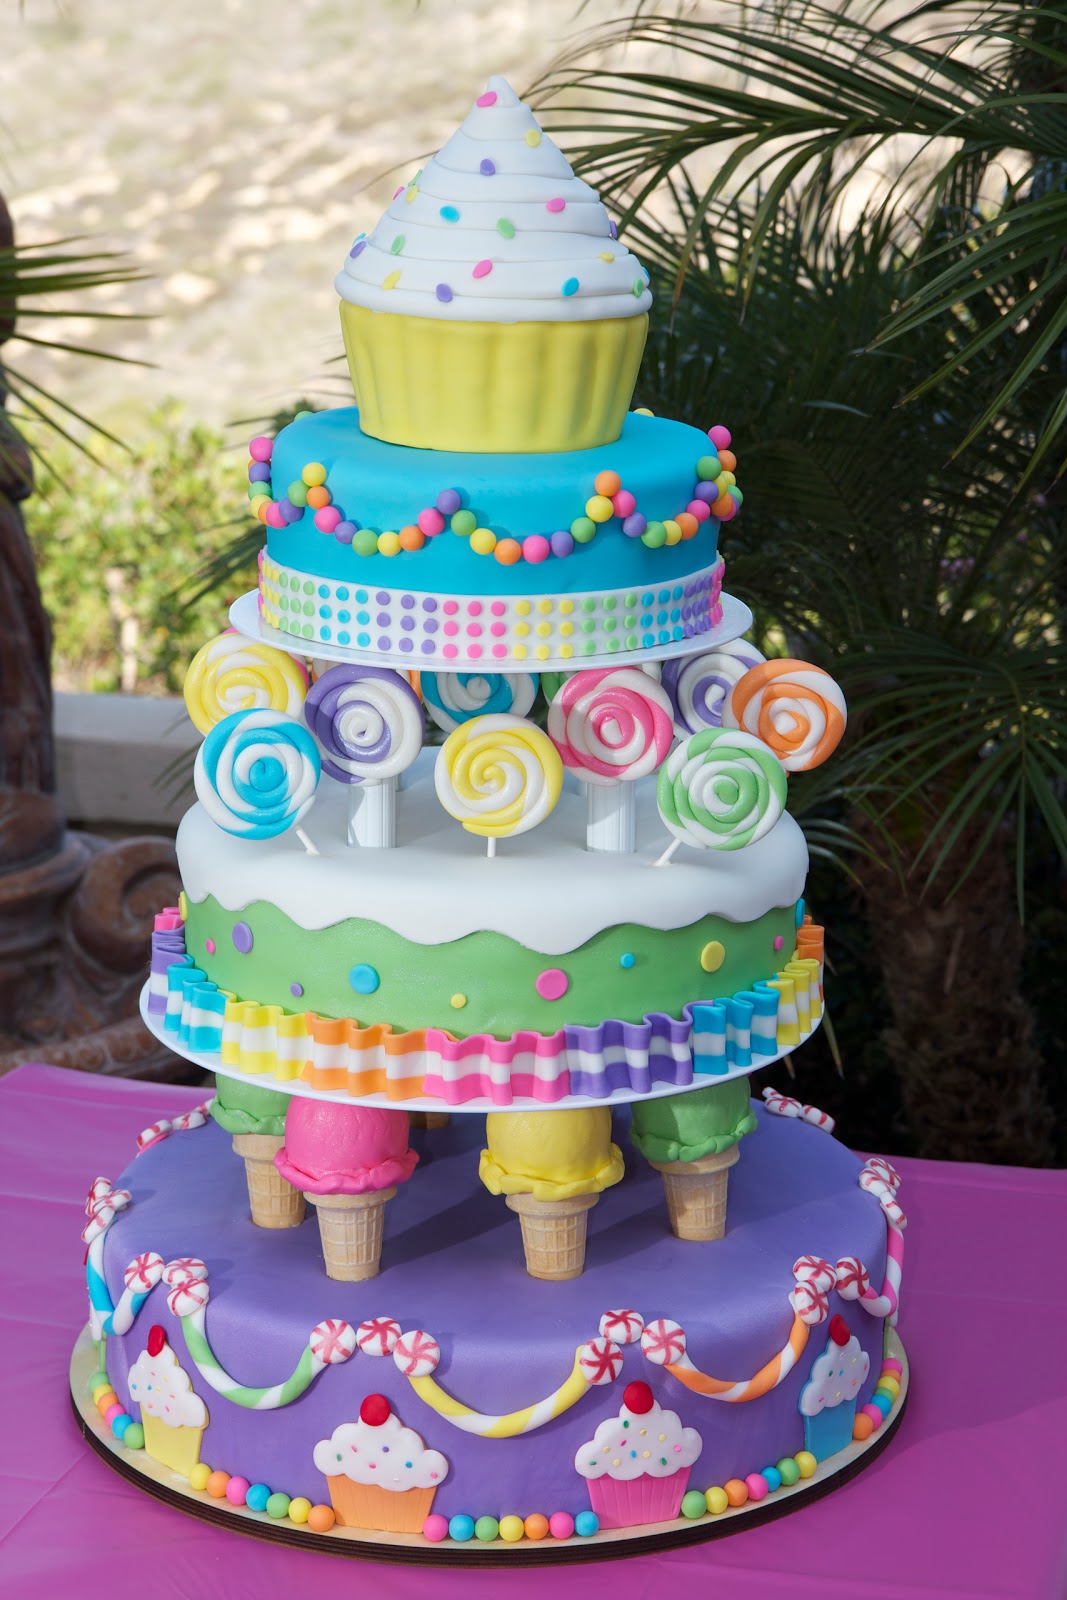 Purple Theme Wedding Cake By Veritys Creative Cakes ...